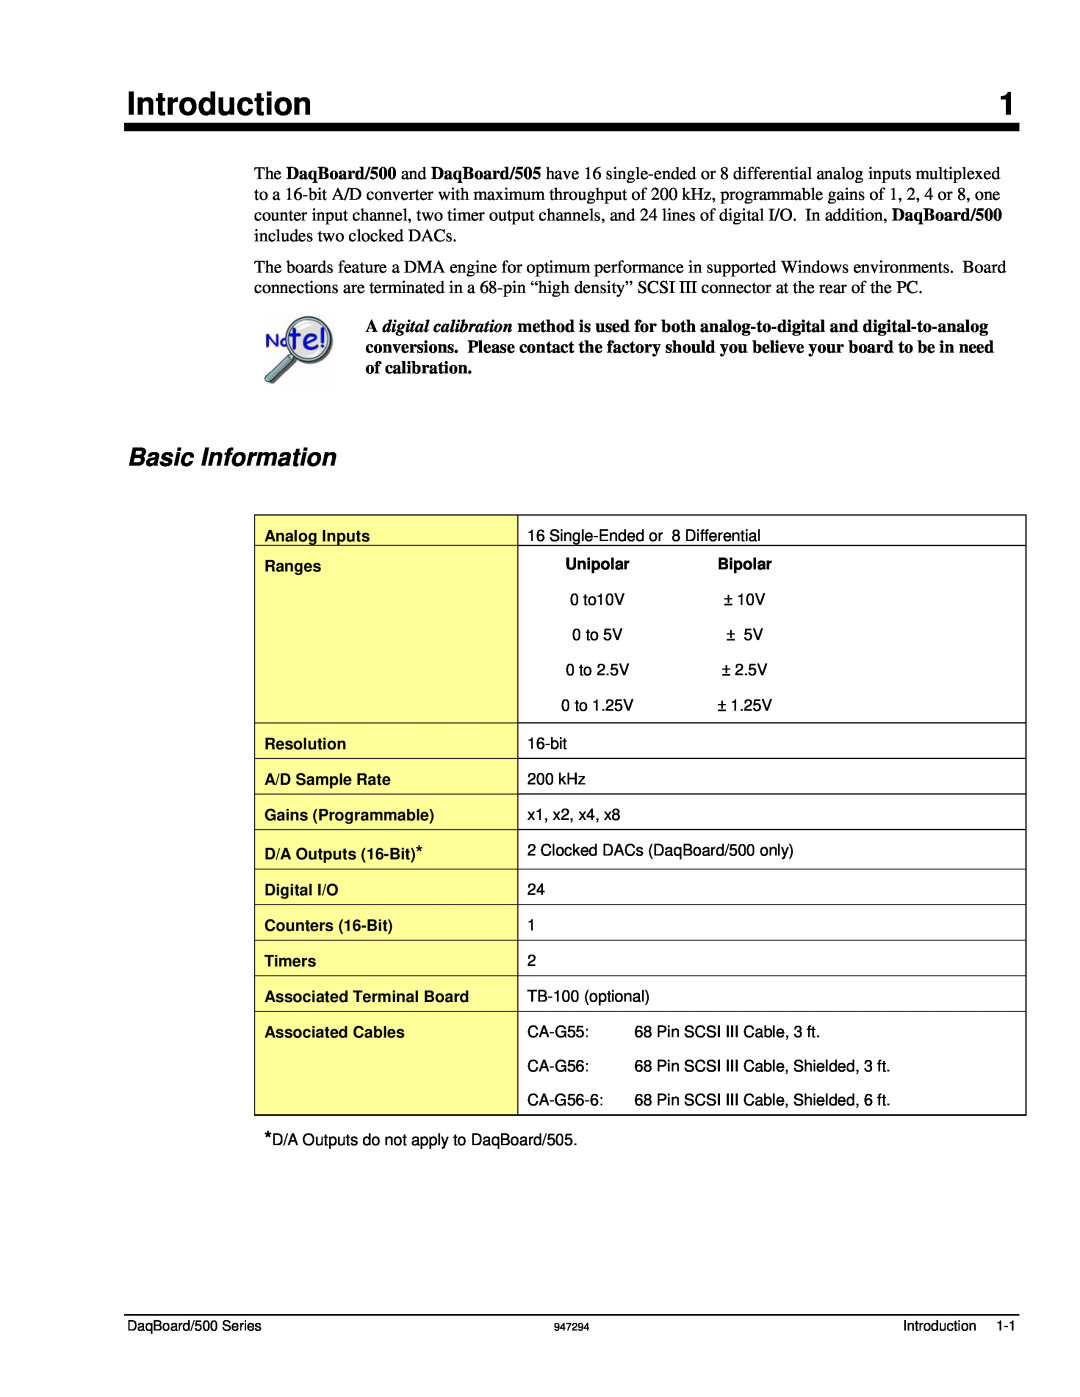 Omega OMB-DAQBOARD-500 manual Introduction, Basic Information 